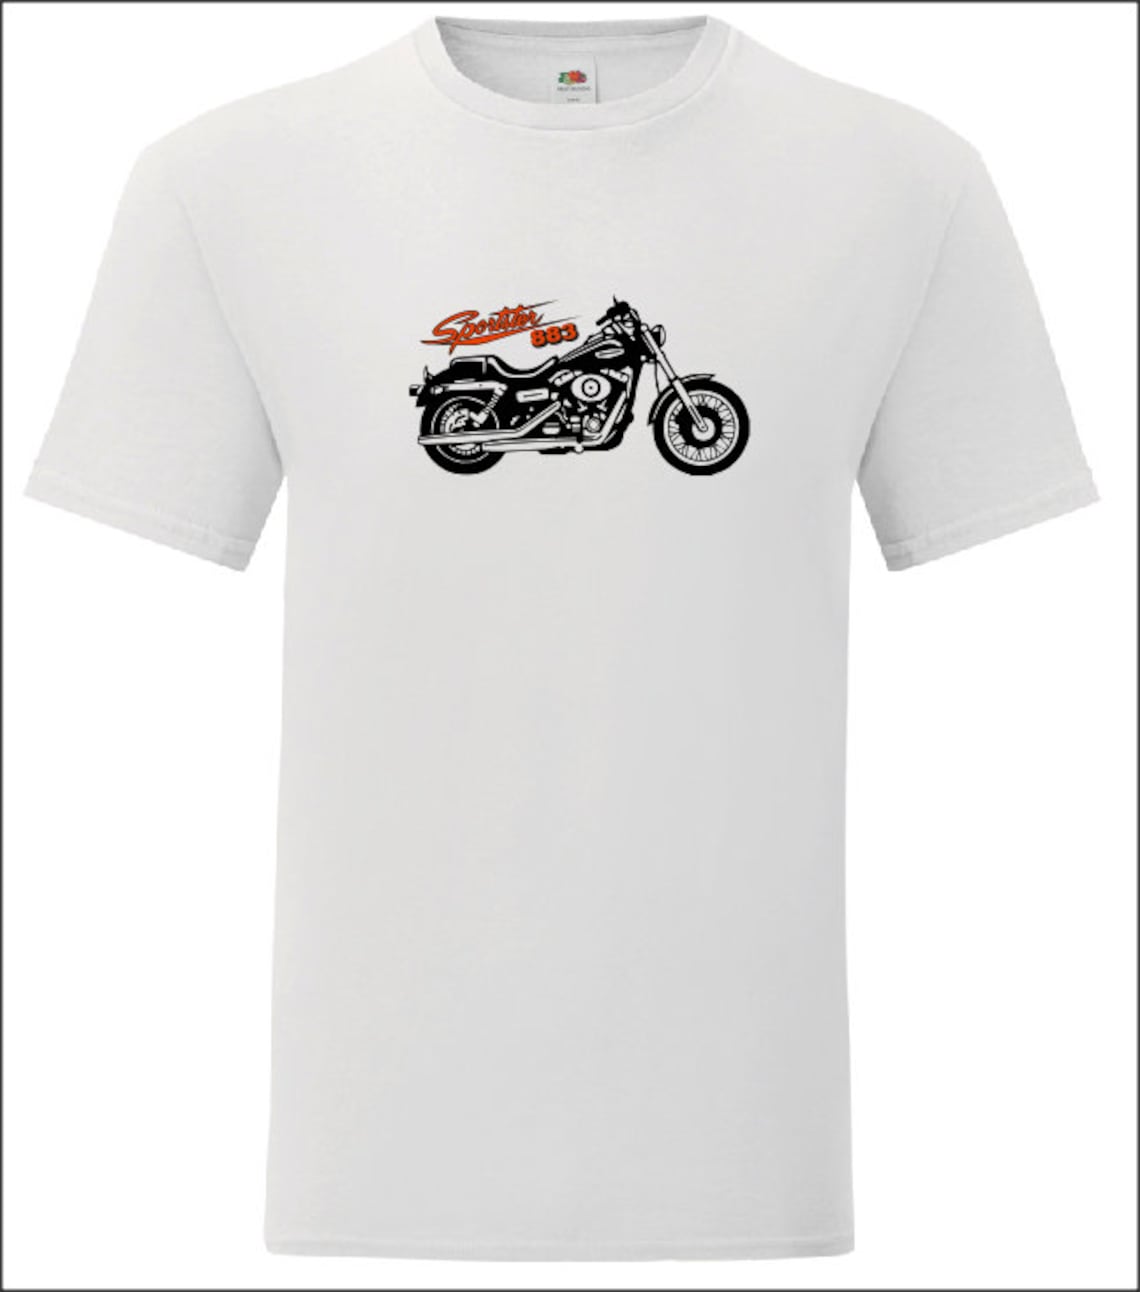 Harley Davidson Sportster T-shirt Motorcycle shirt | Etsy